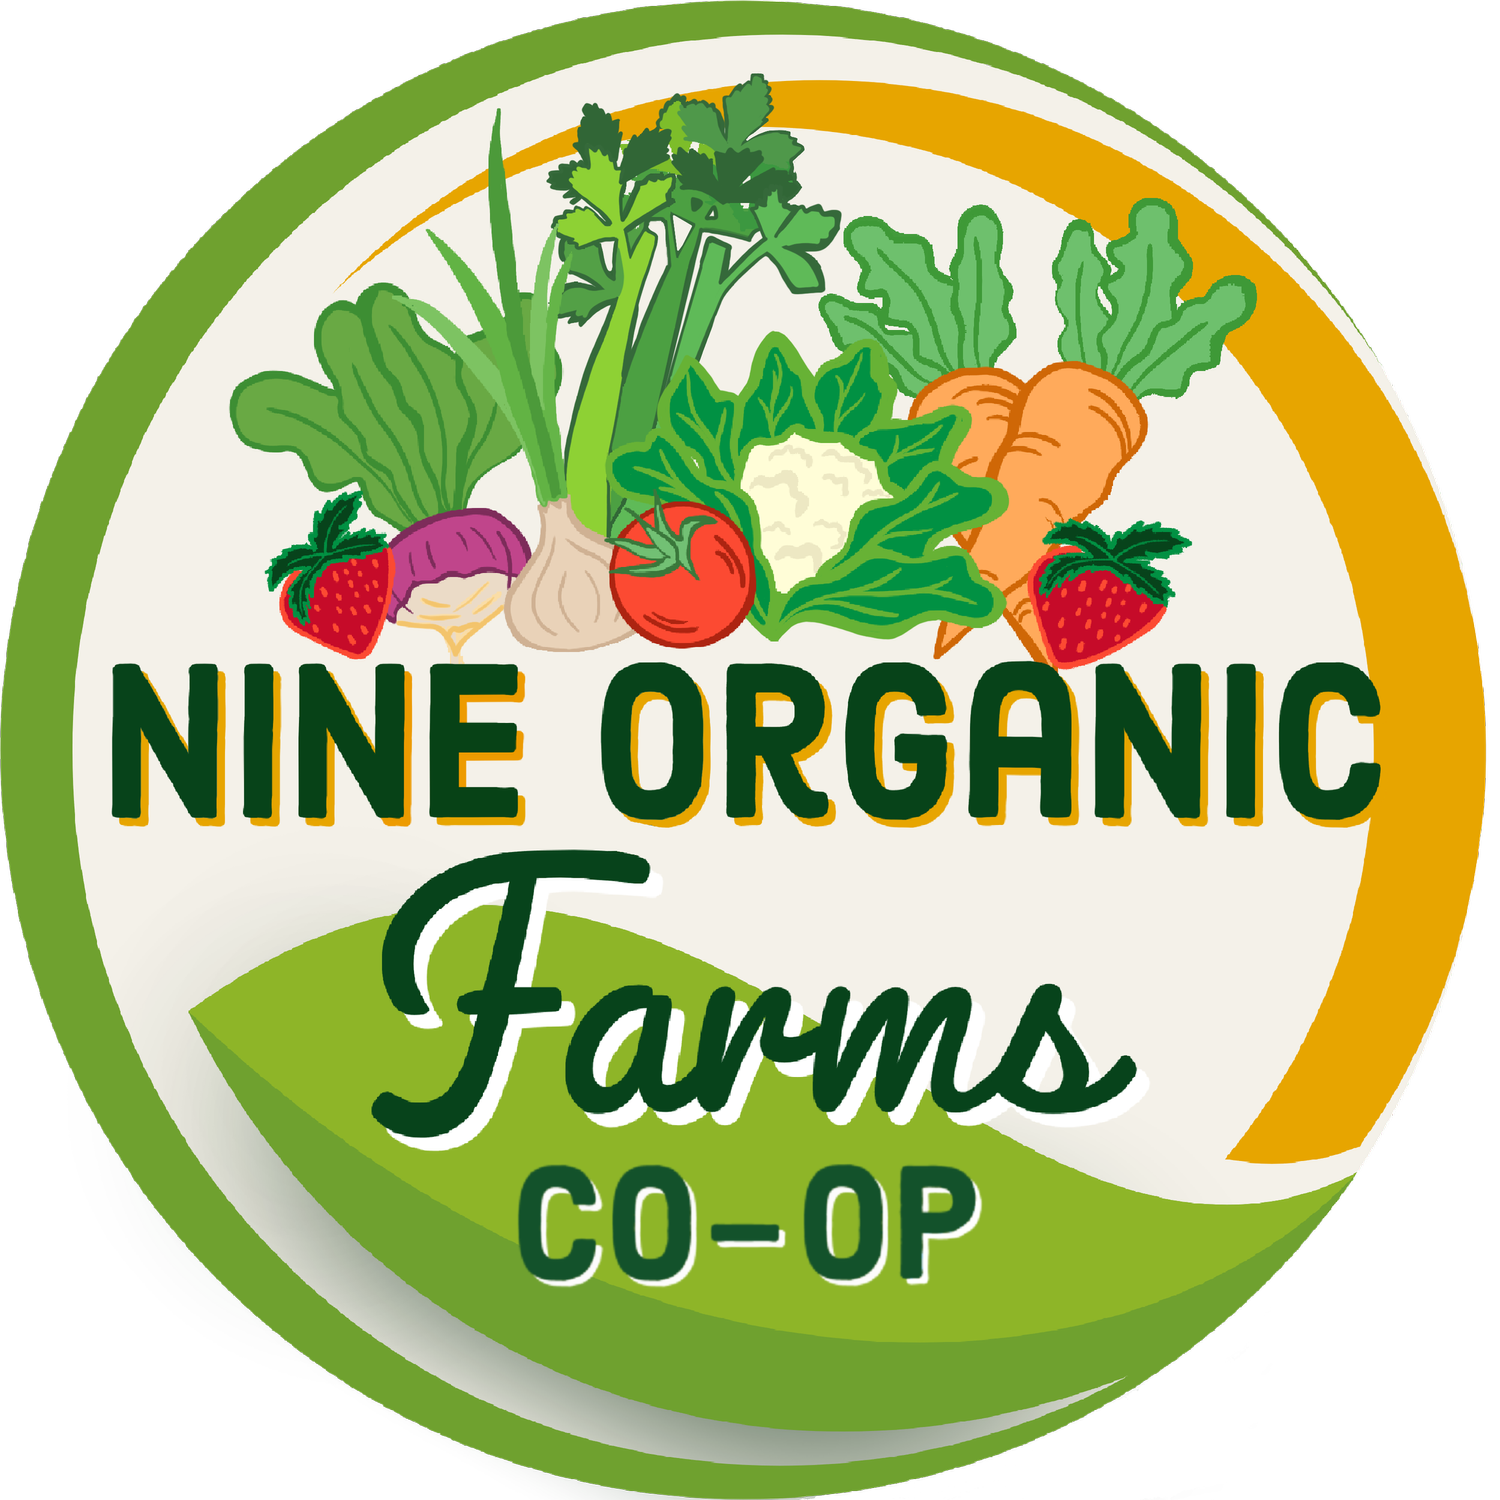 9 Organic Farms Co-Op